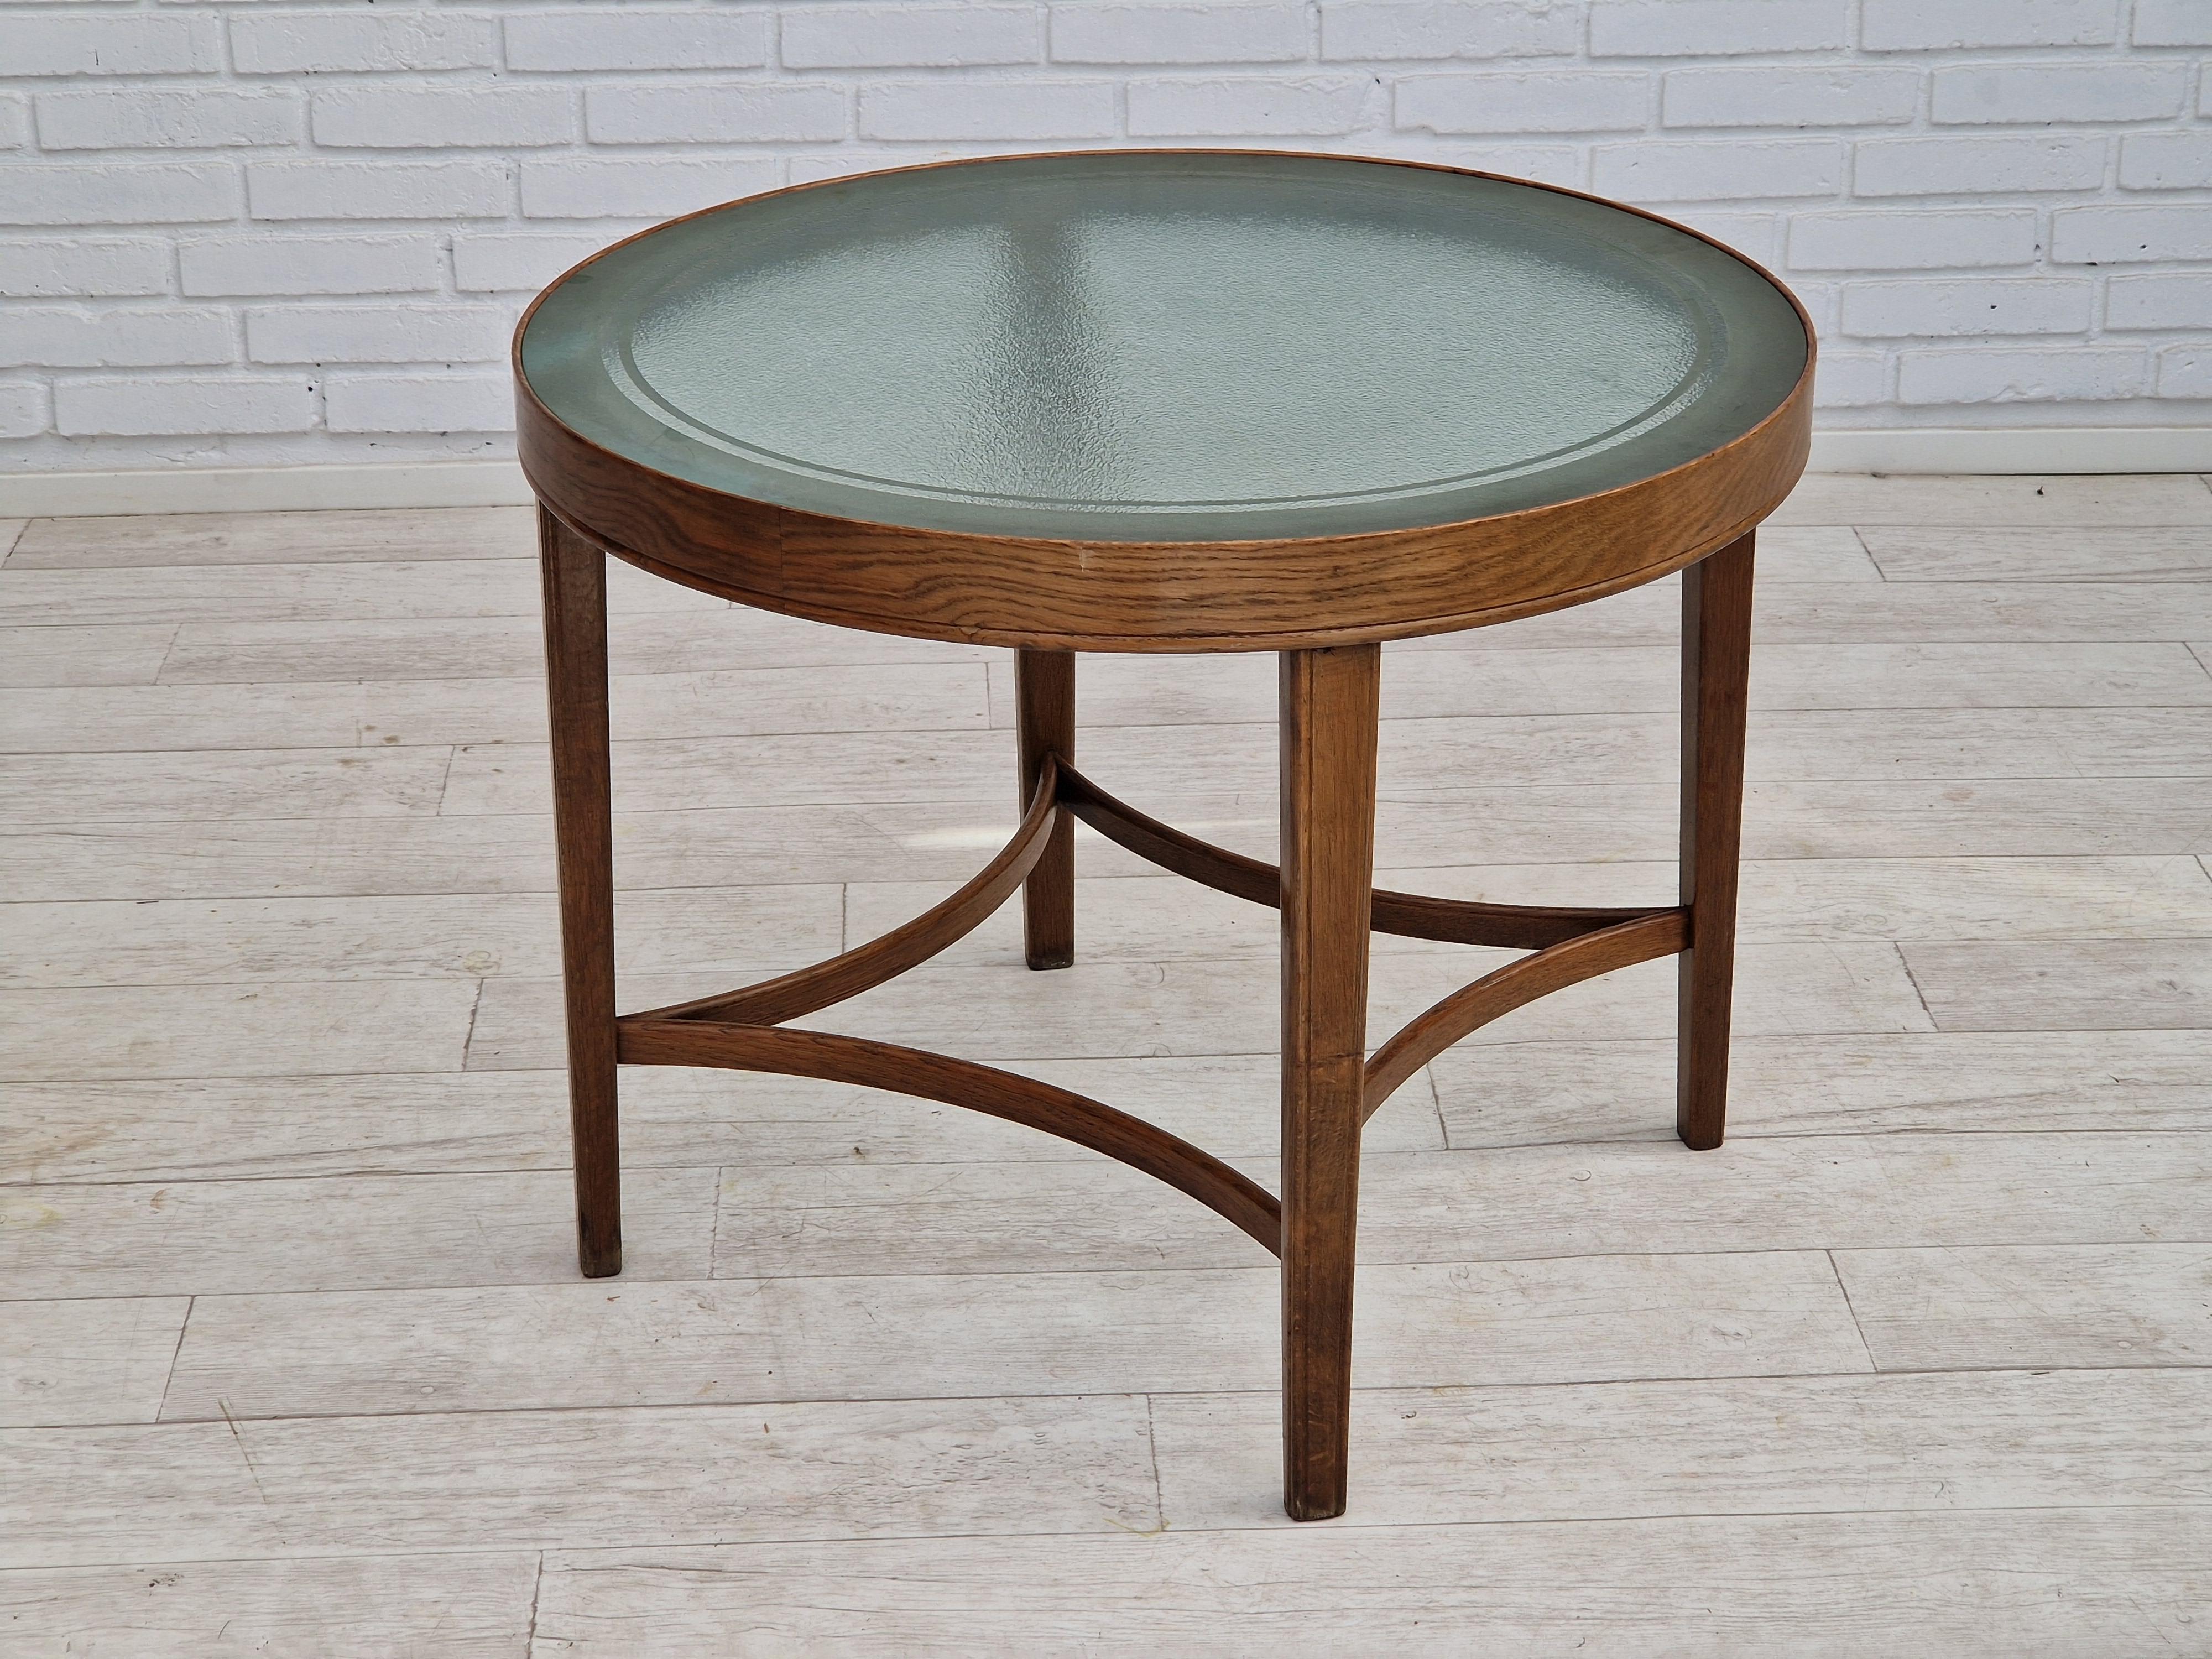 1950s, Danish design, coffee table, glass, oak wood, original condition. 7